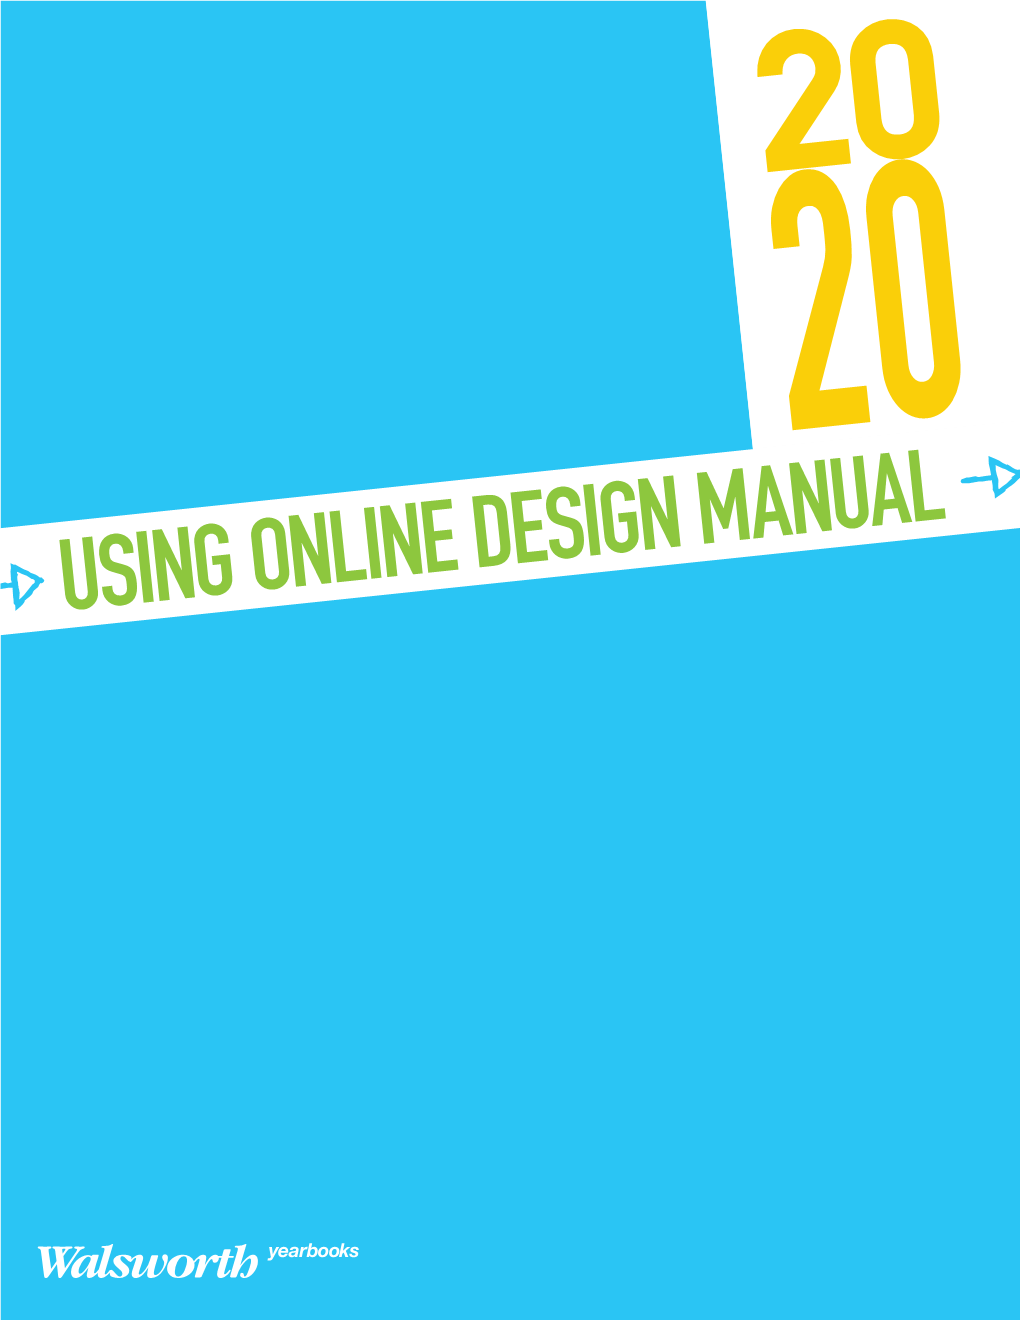 Using Online Design Manual